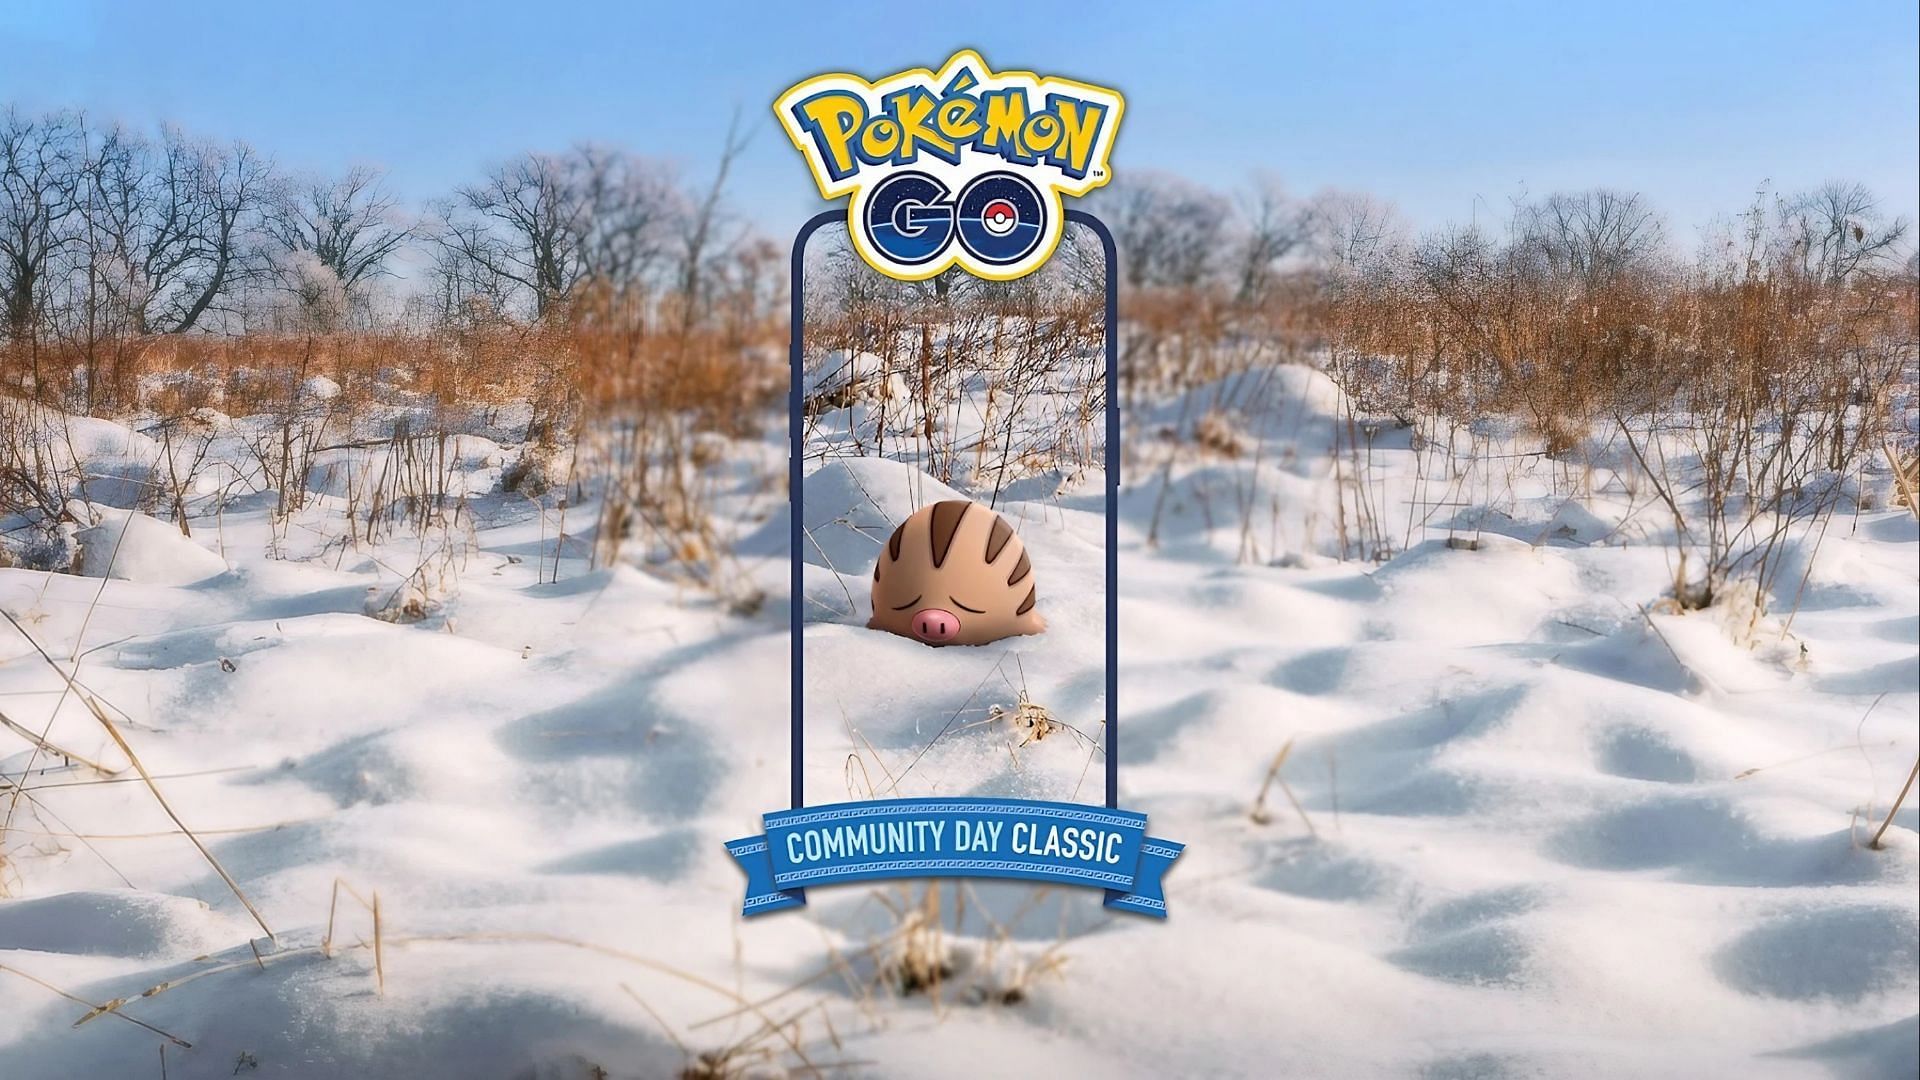 Community Day Classic event announced (Image via Pokemon GO)